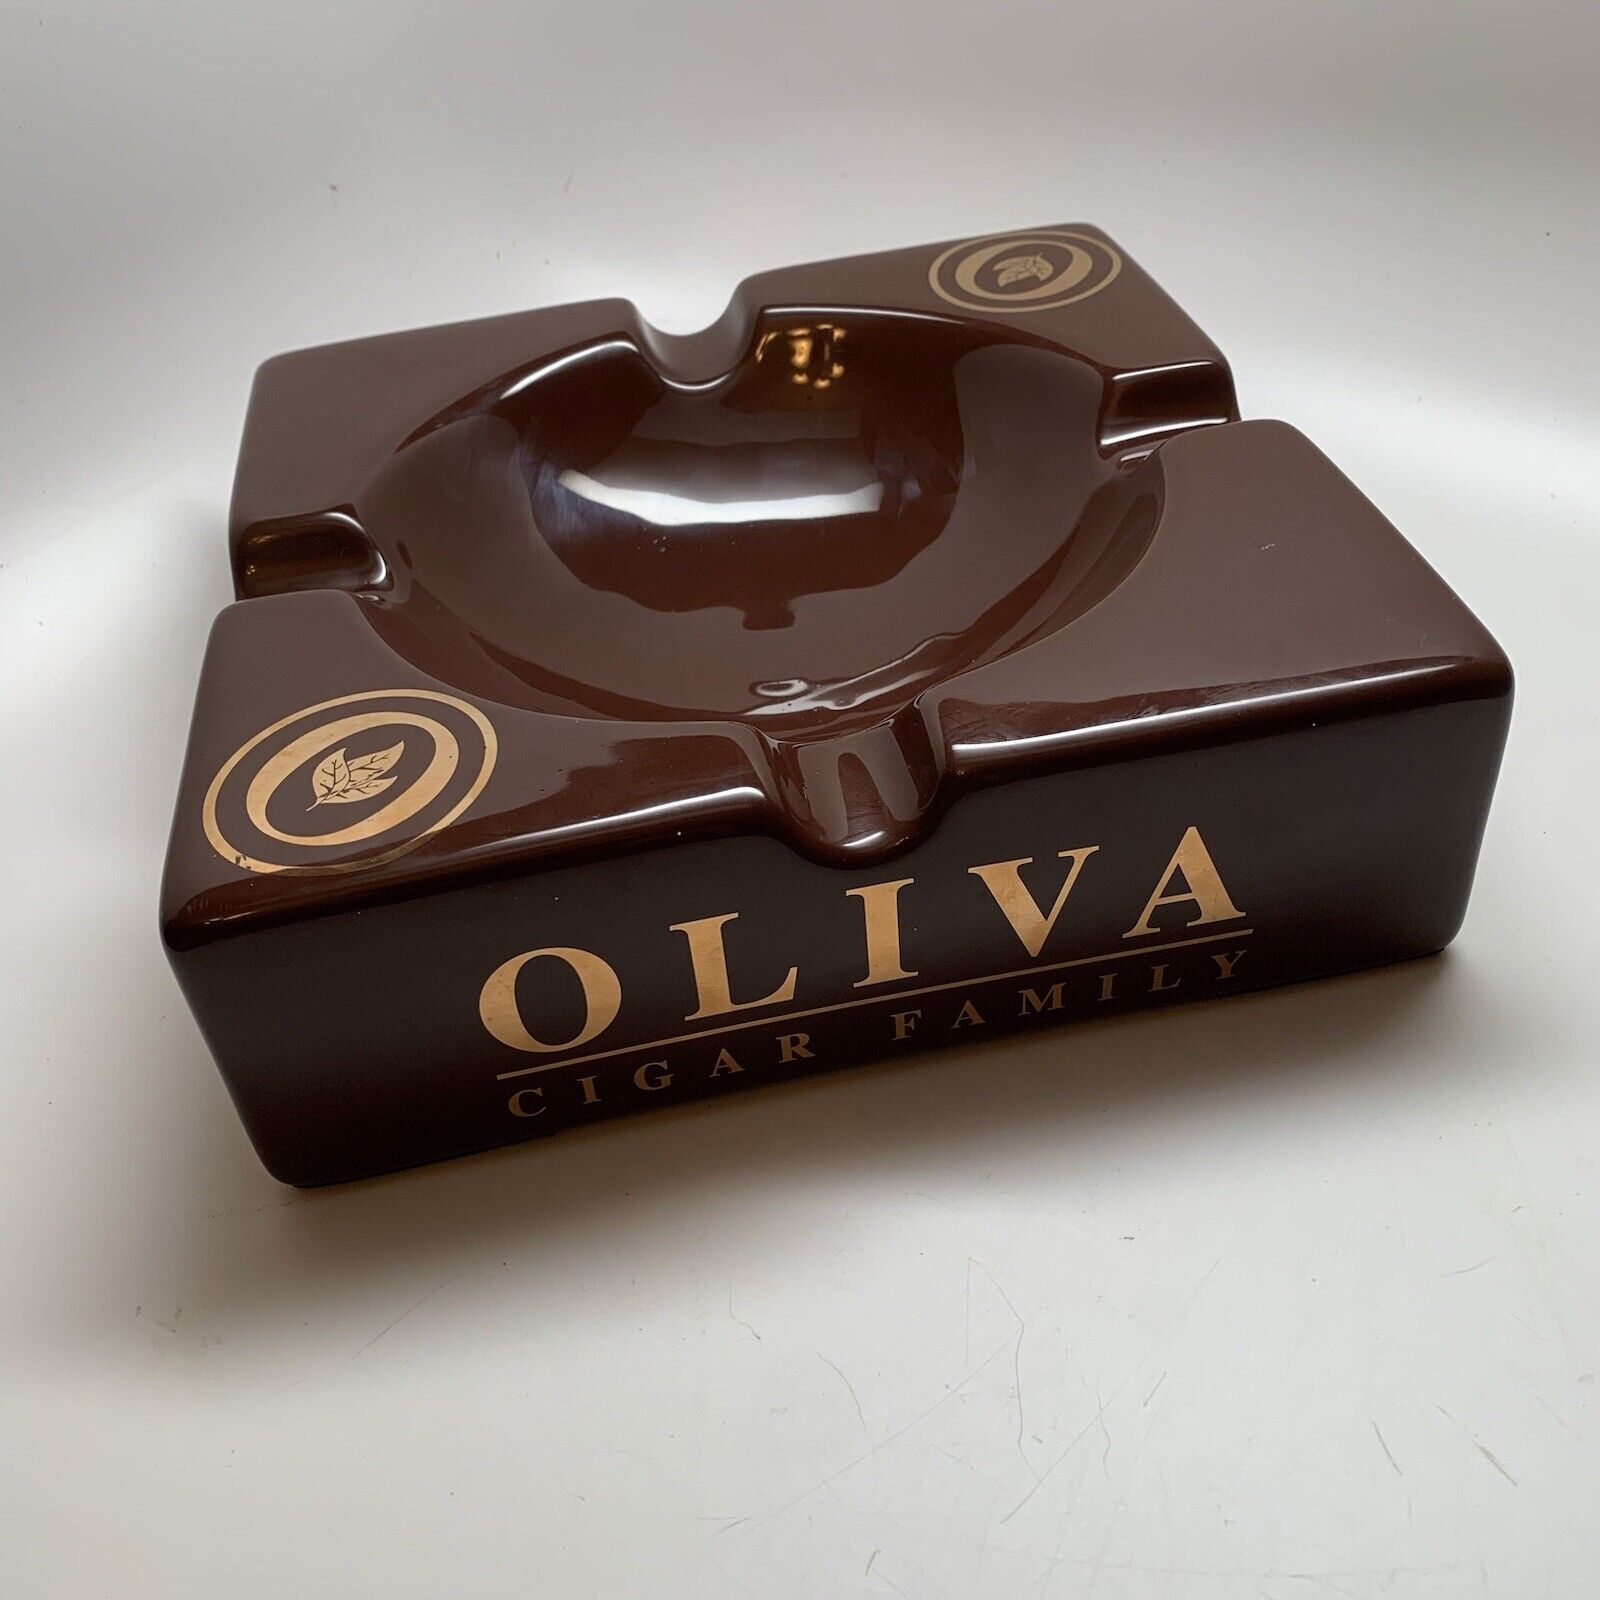 OLIVA Cigar Family Large Cigar Ashtray, Large 9”x9”x3” Ceramic